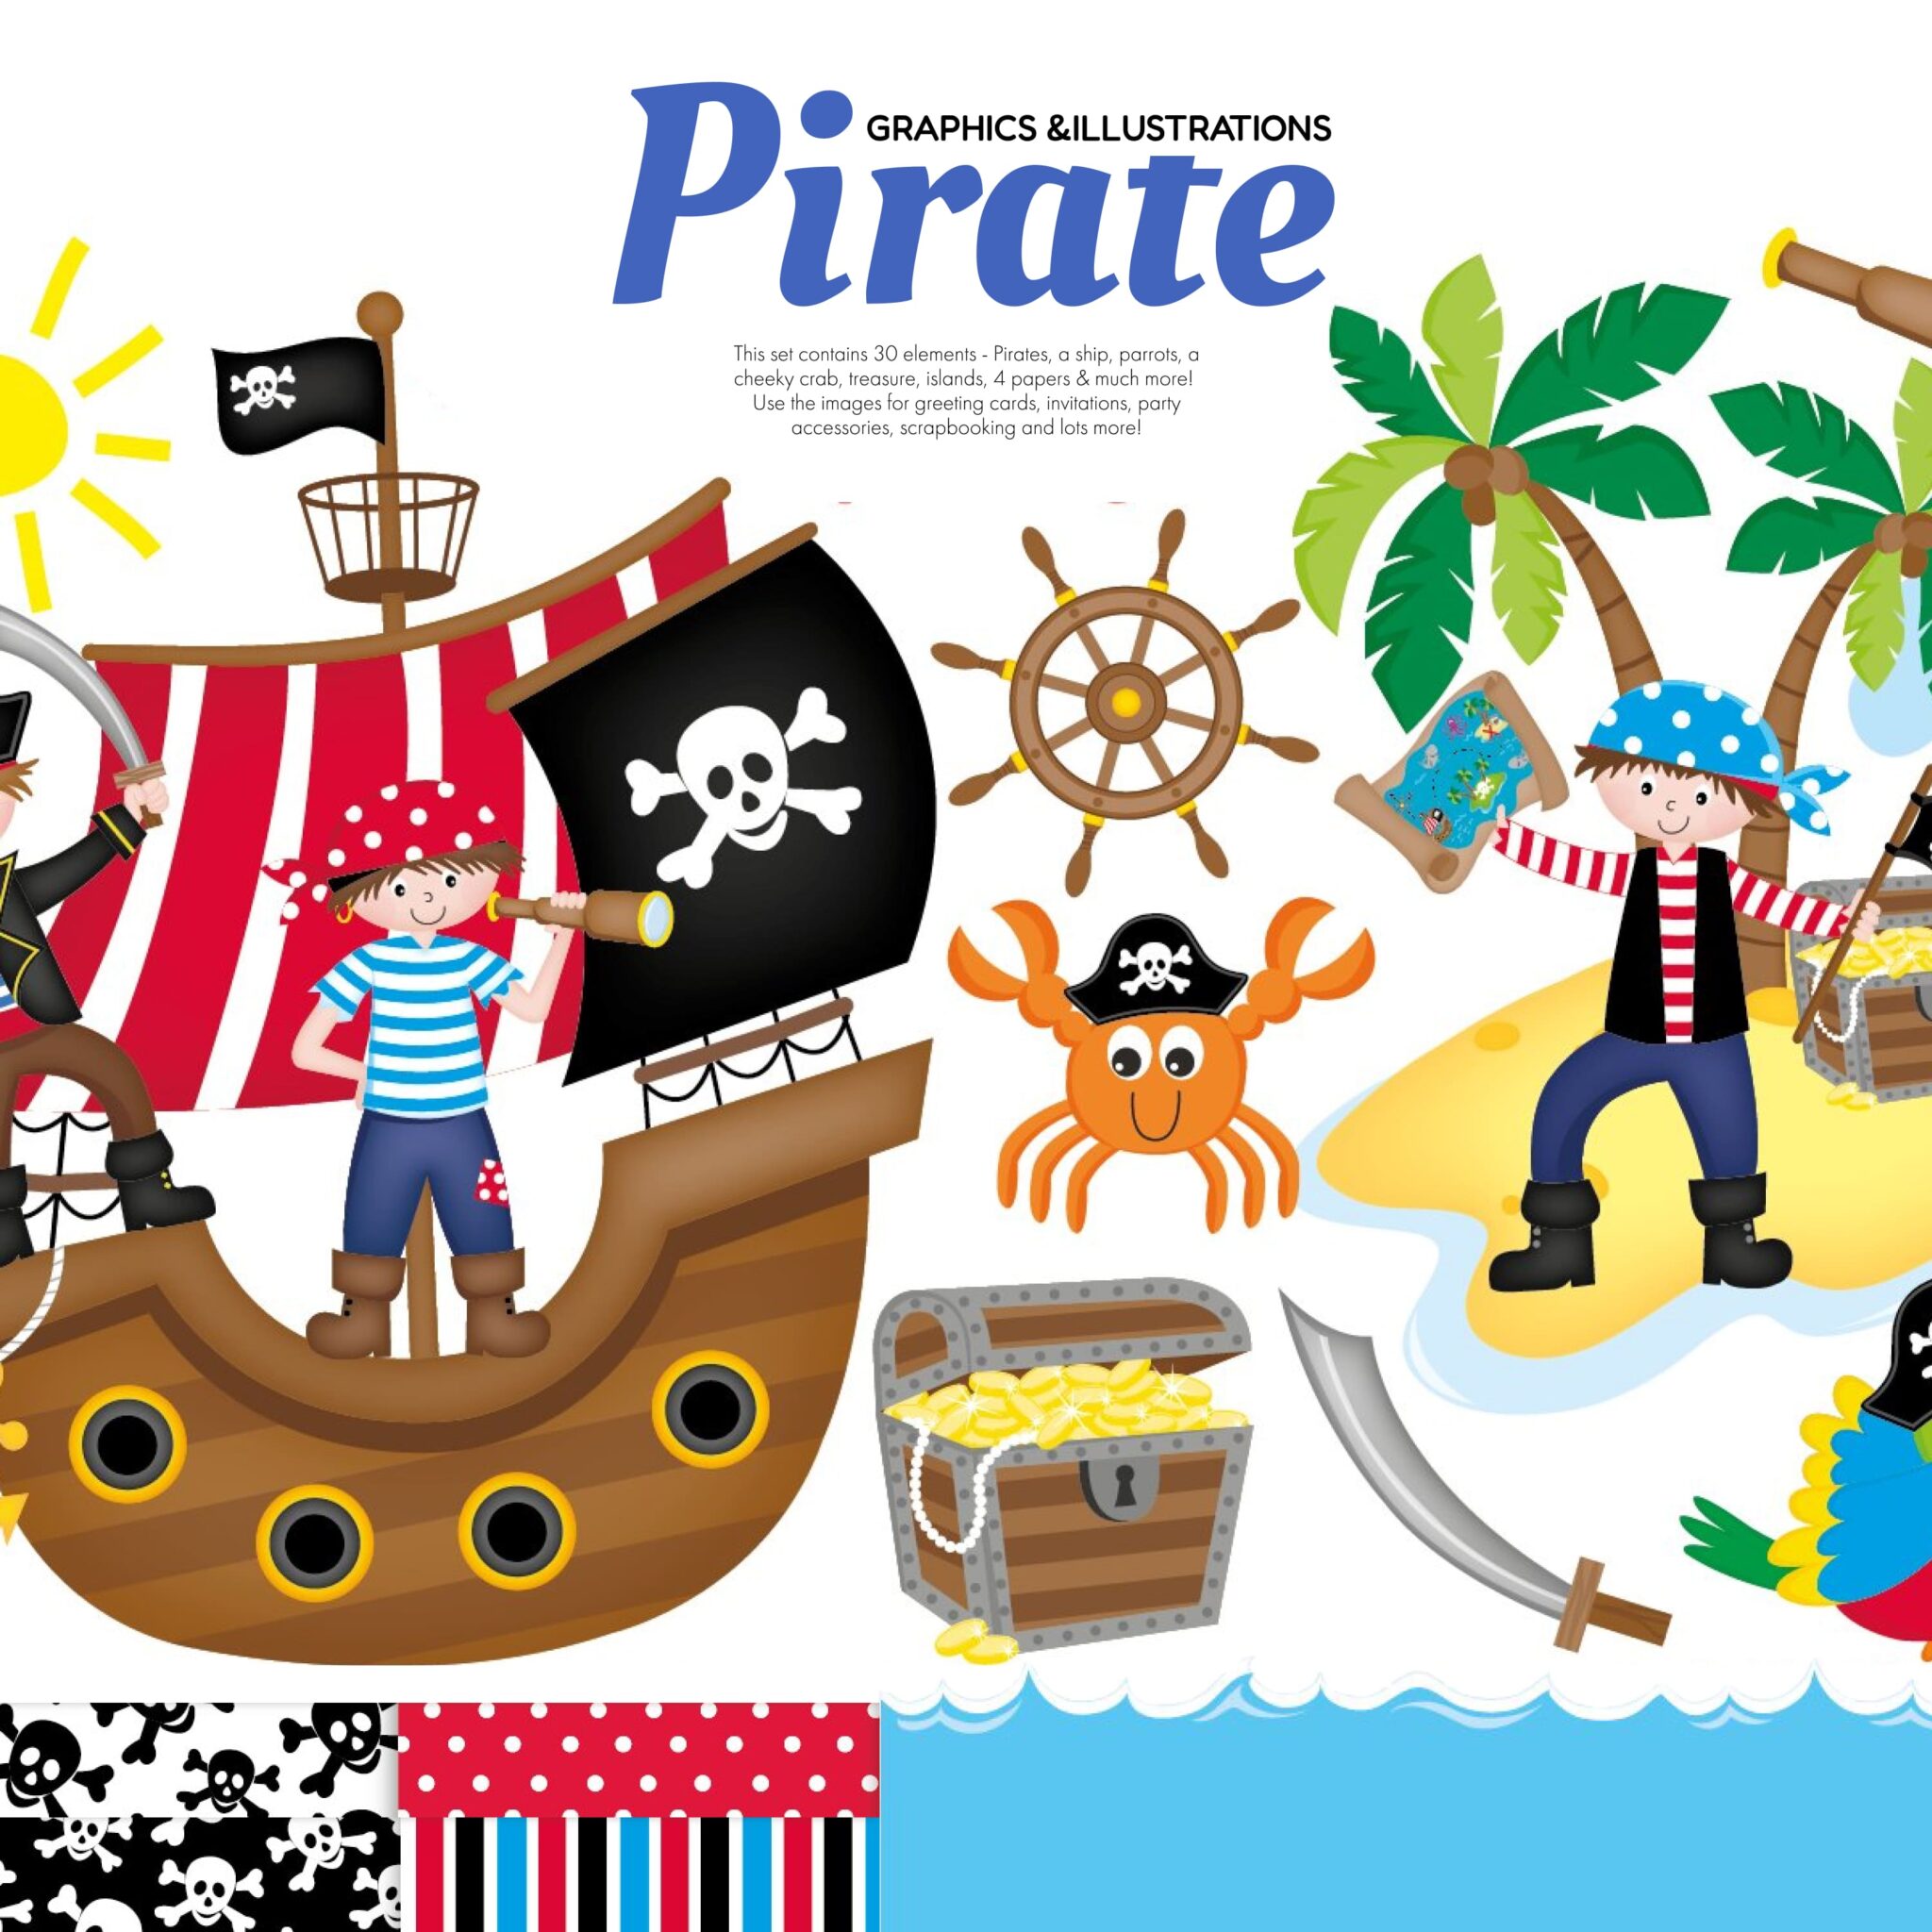 Pirate Clipart, Pirate Graphics & Illustrations, Pirate Ship ...